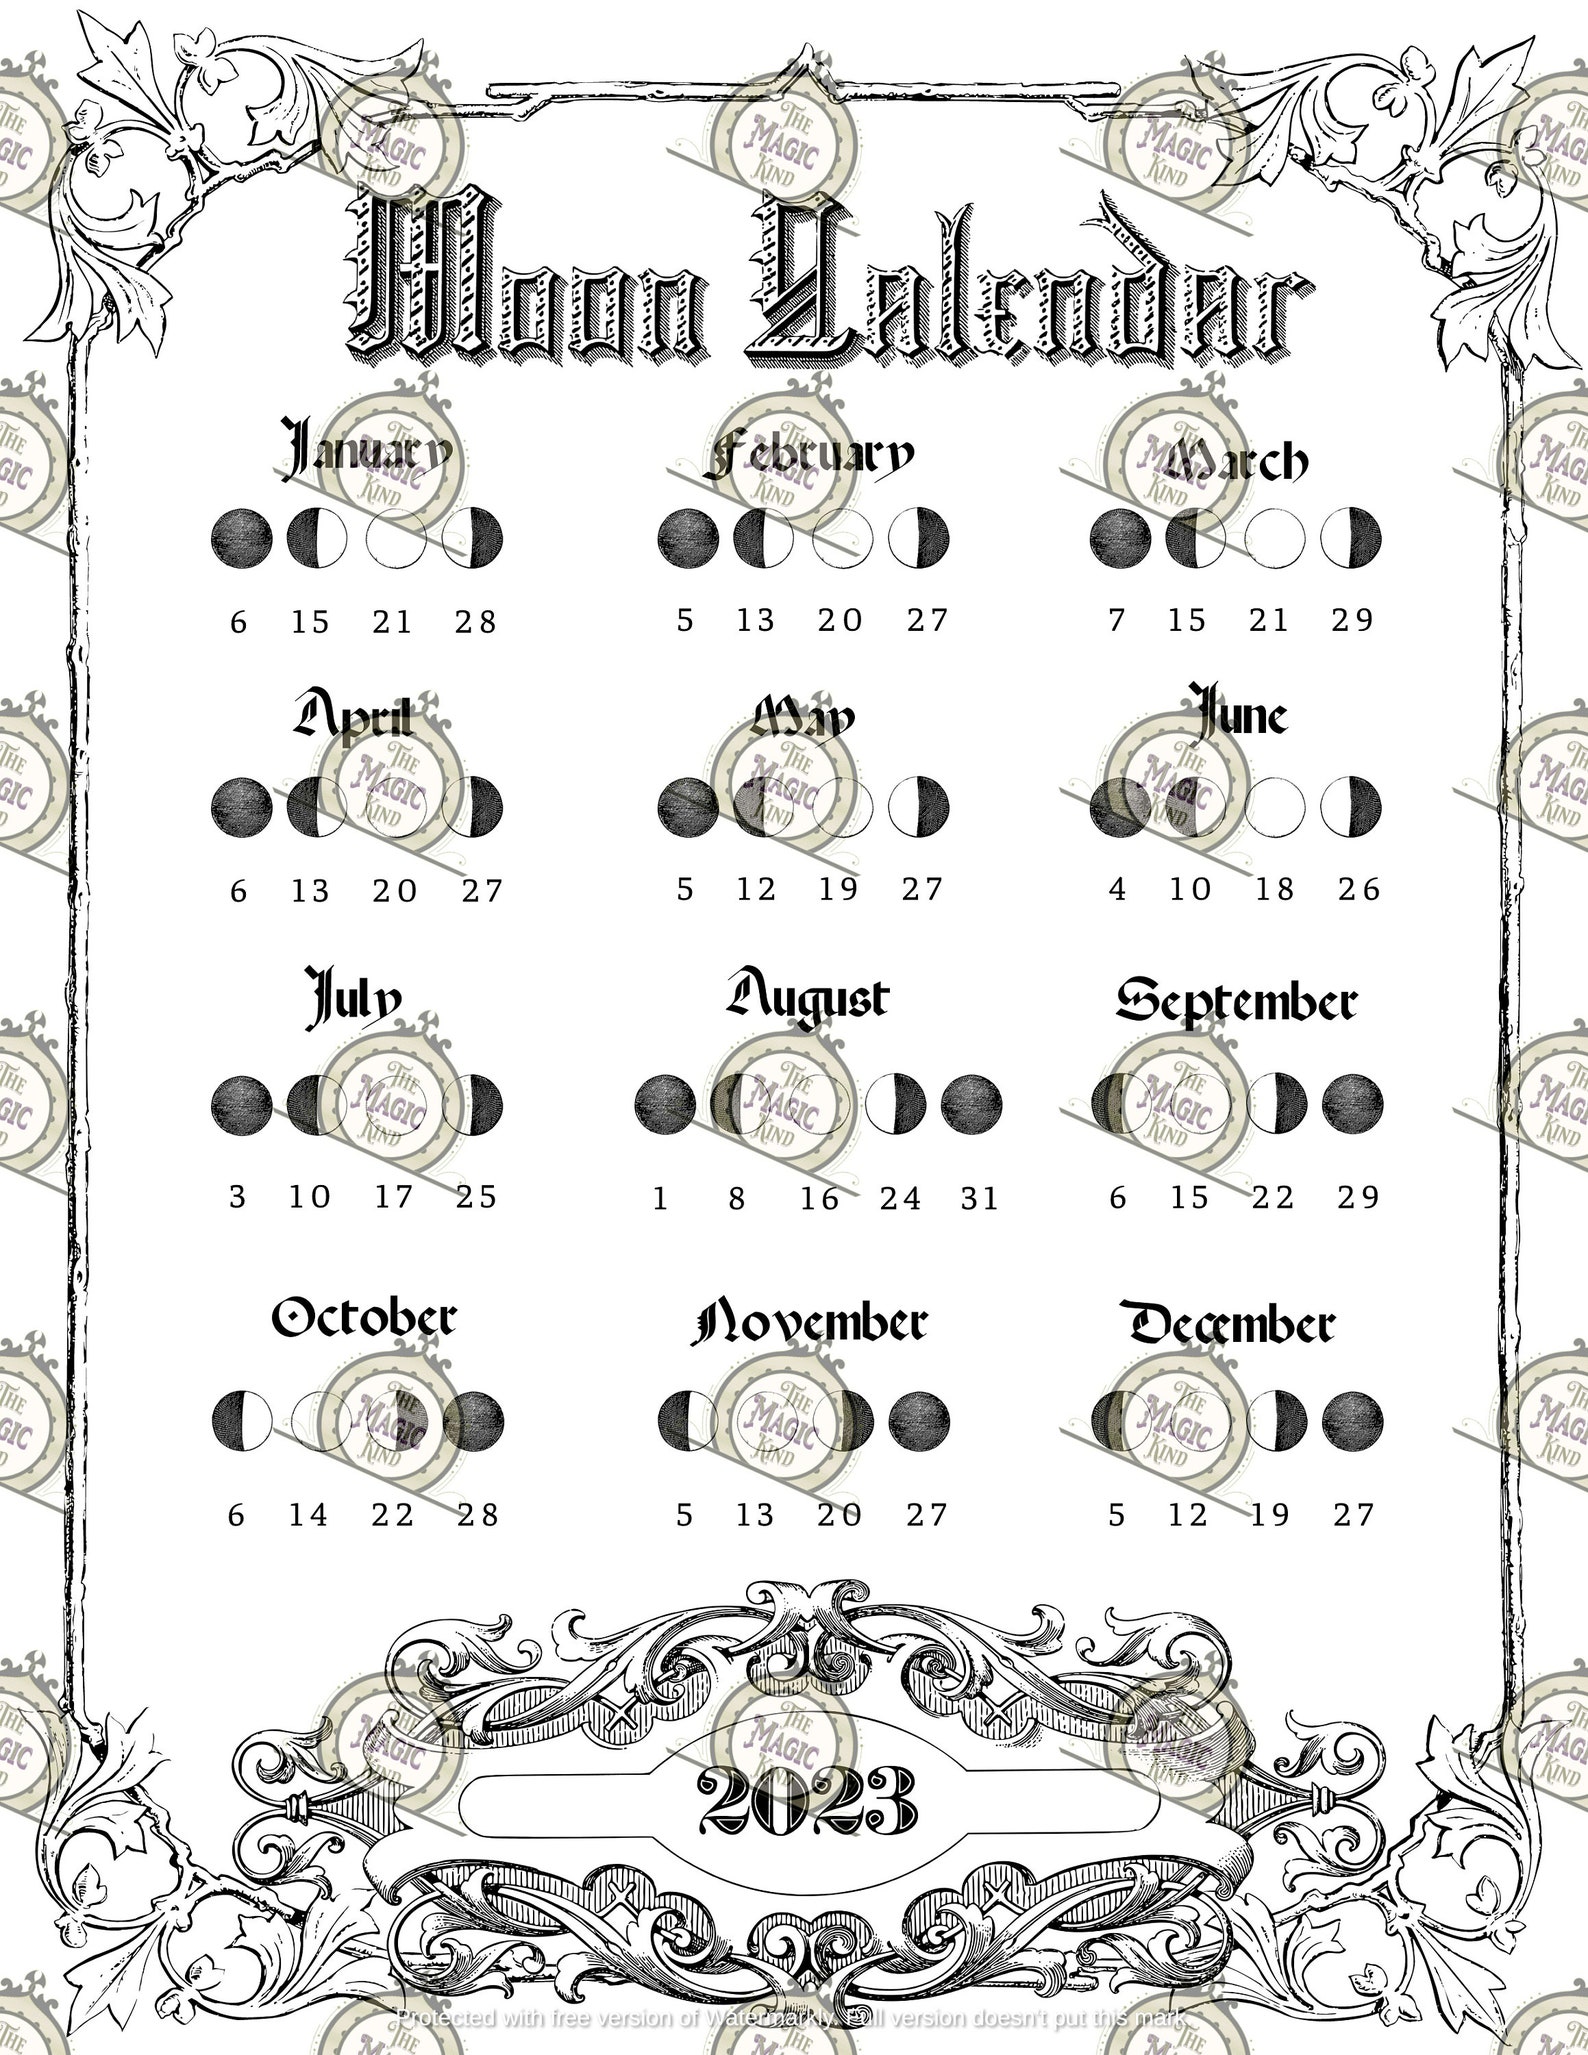 november-2023-moon-phases-printable-template-calendar